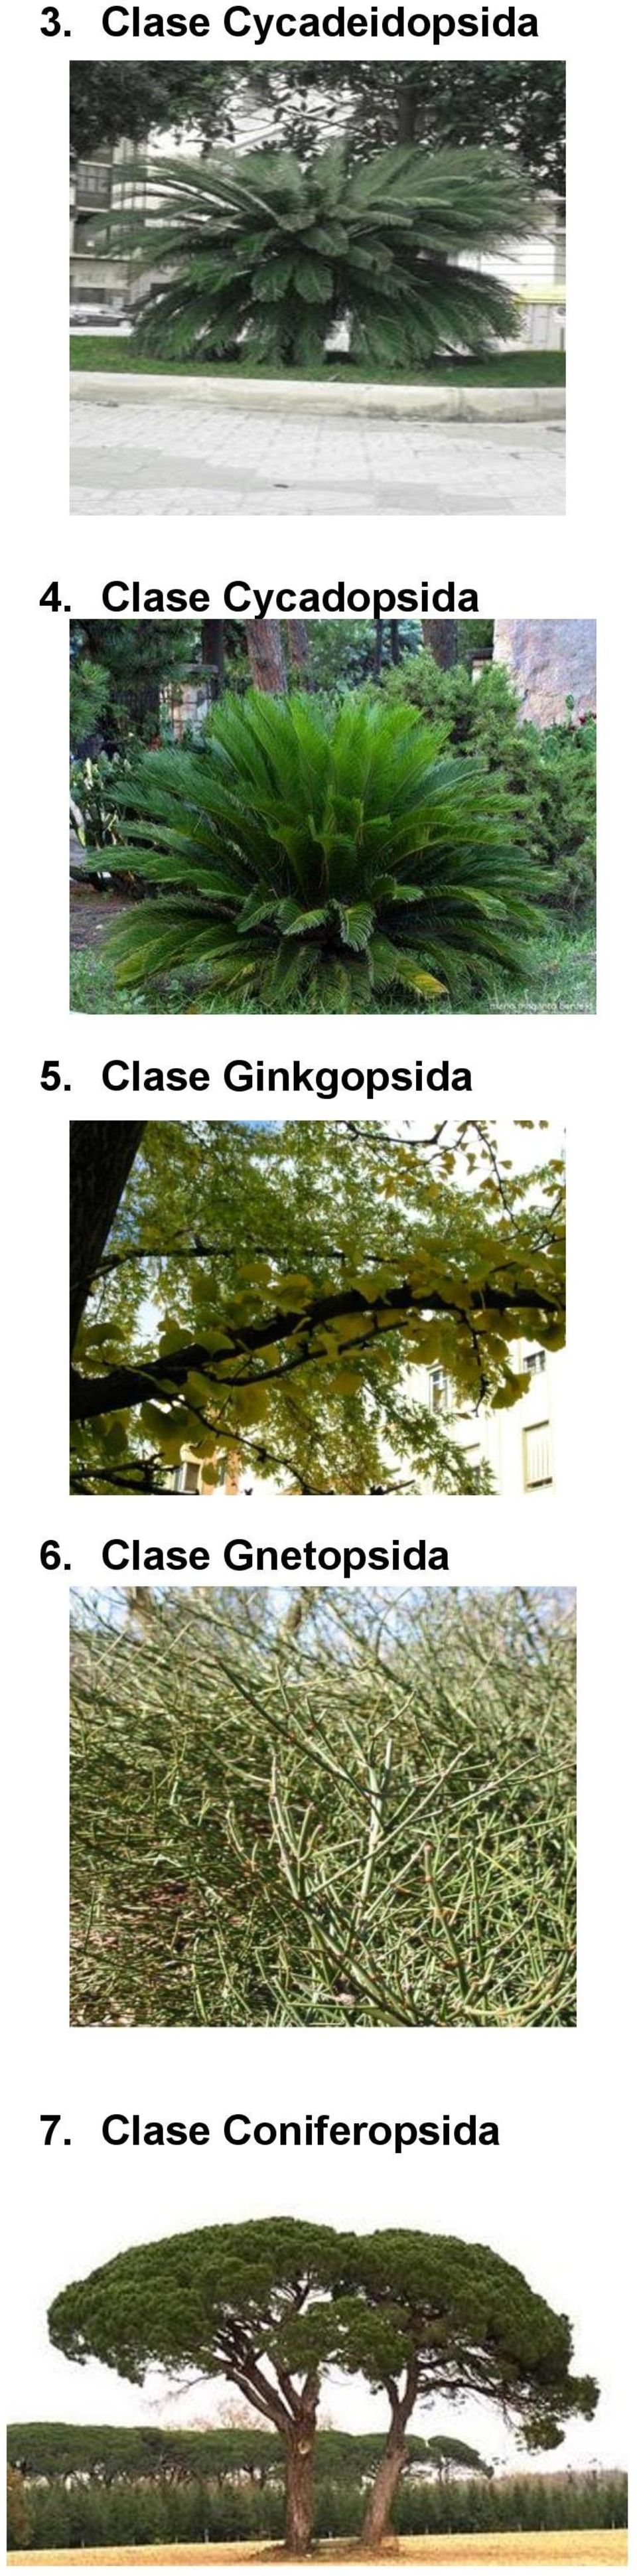 Clase Ginkgopsida 6.